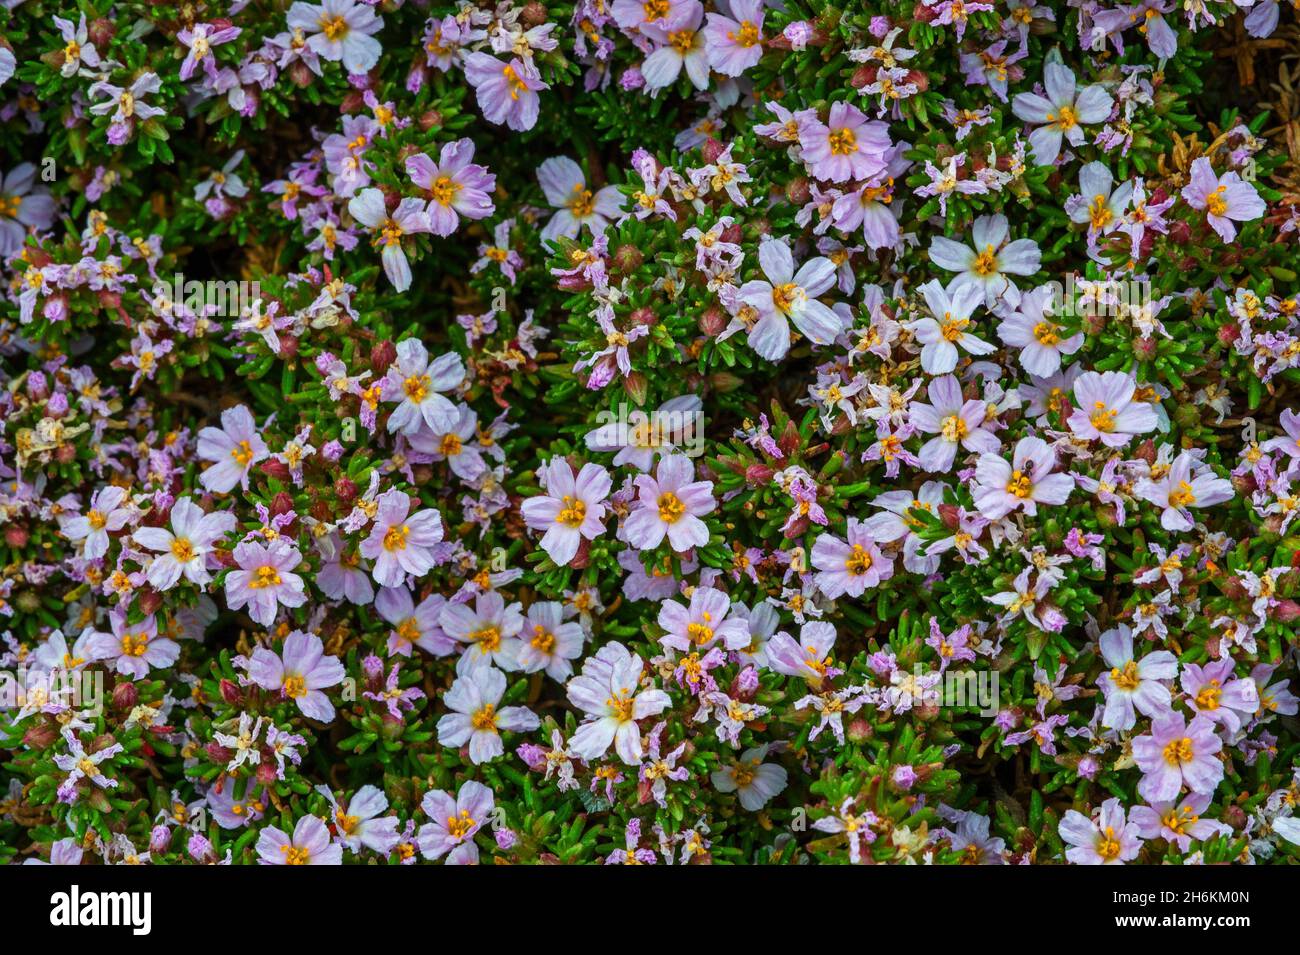 Sea heath (Frankenia laevis) in flower, coastal low shrub native to south-west Europe and Britain Stock Photo